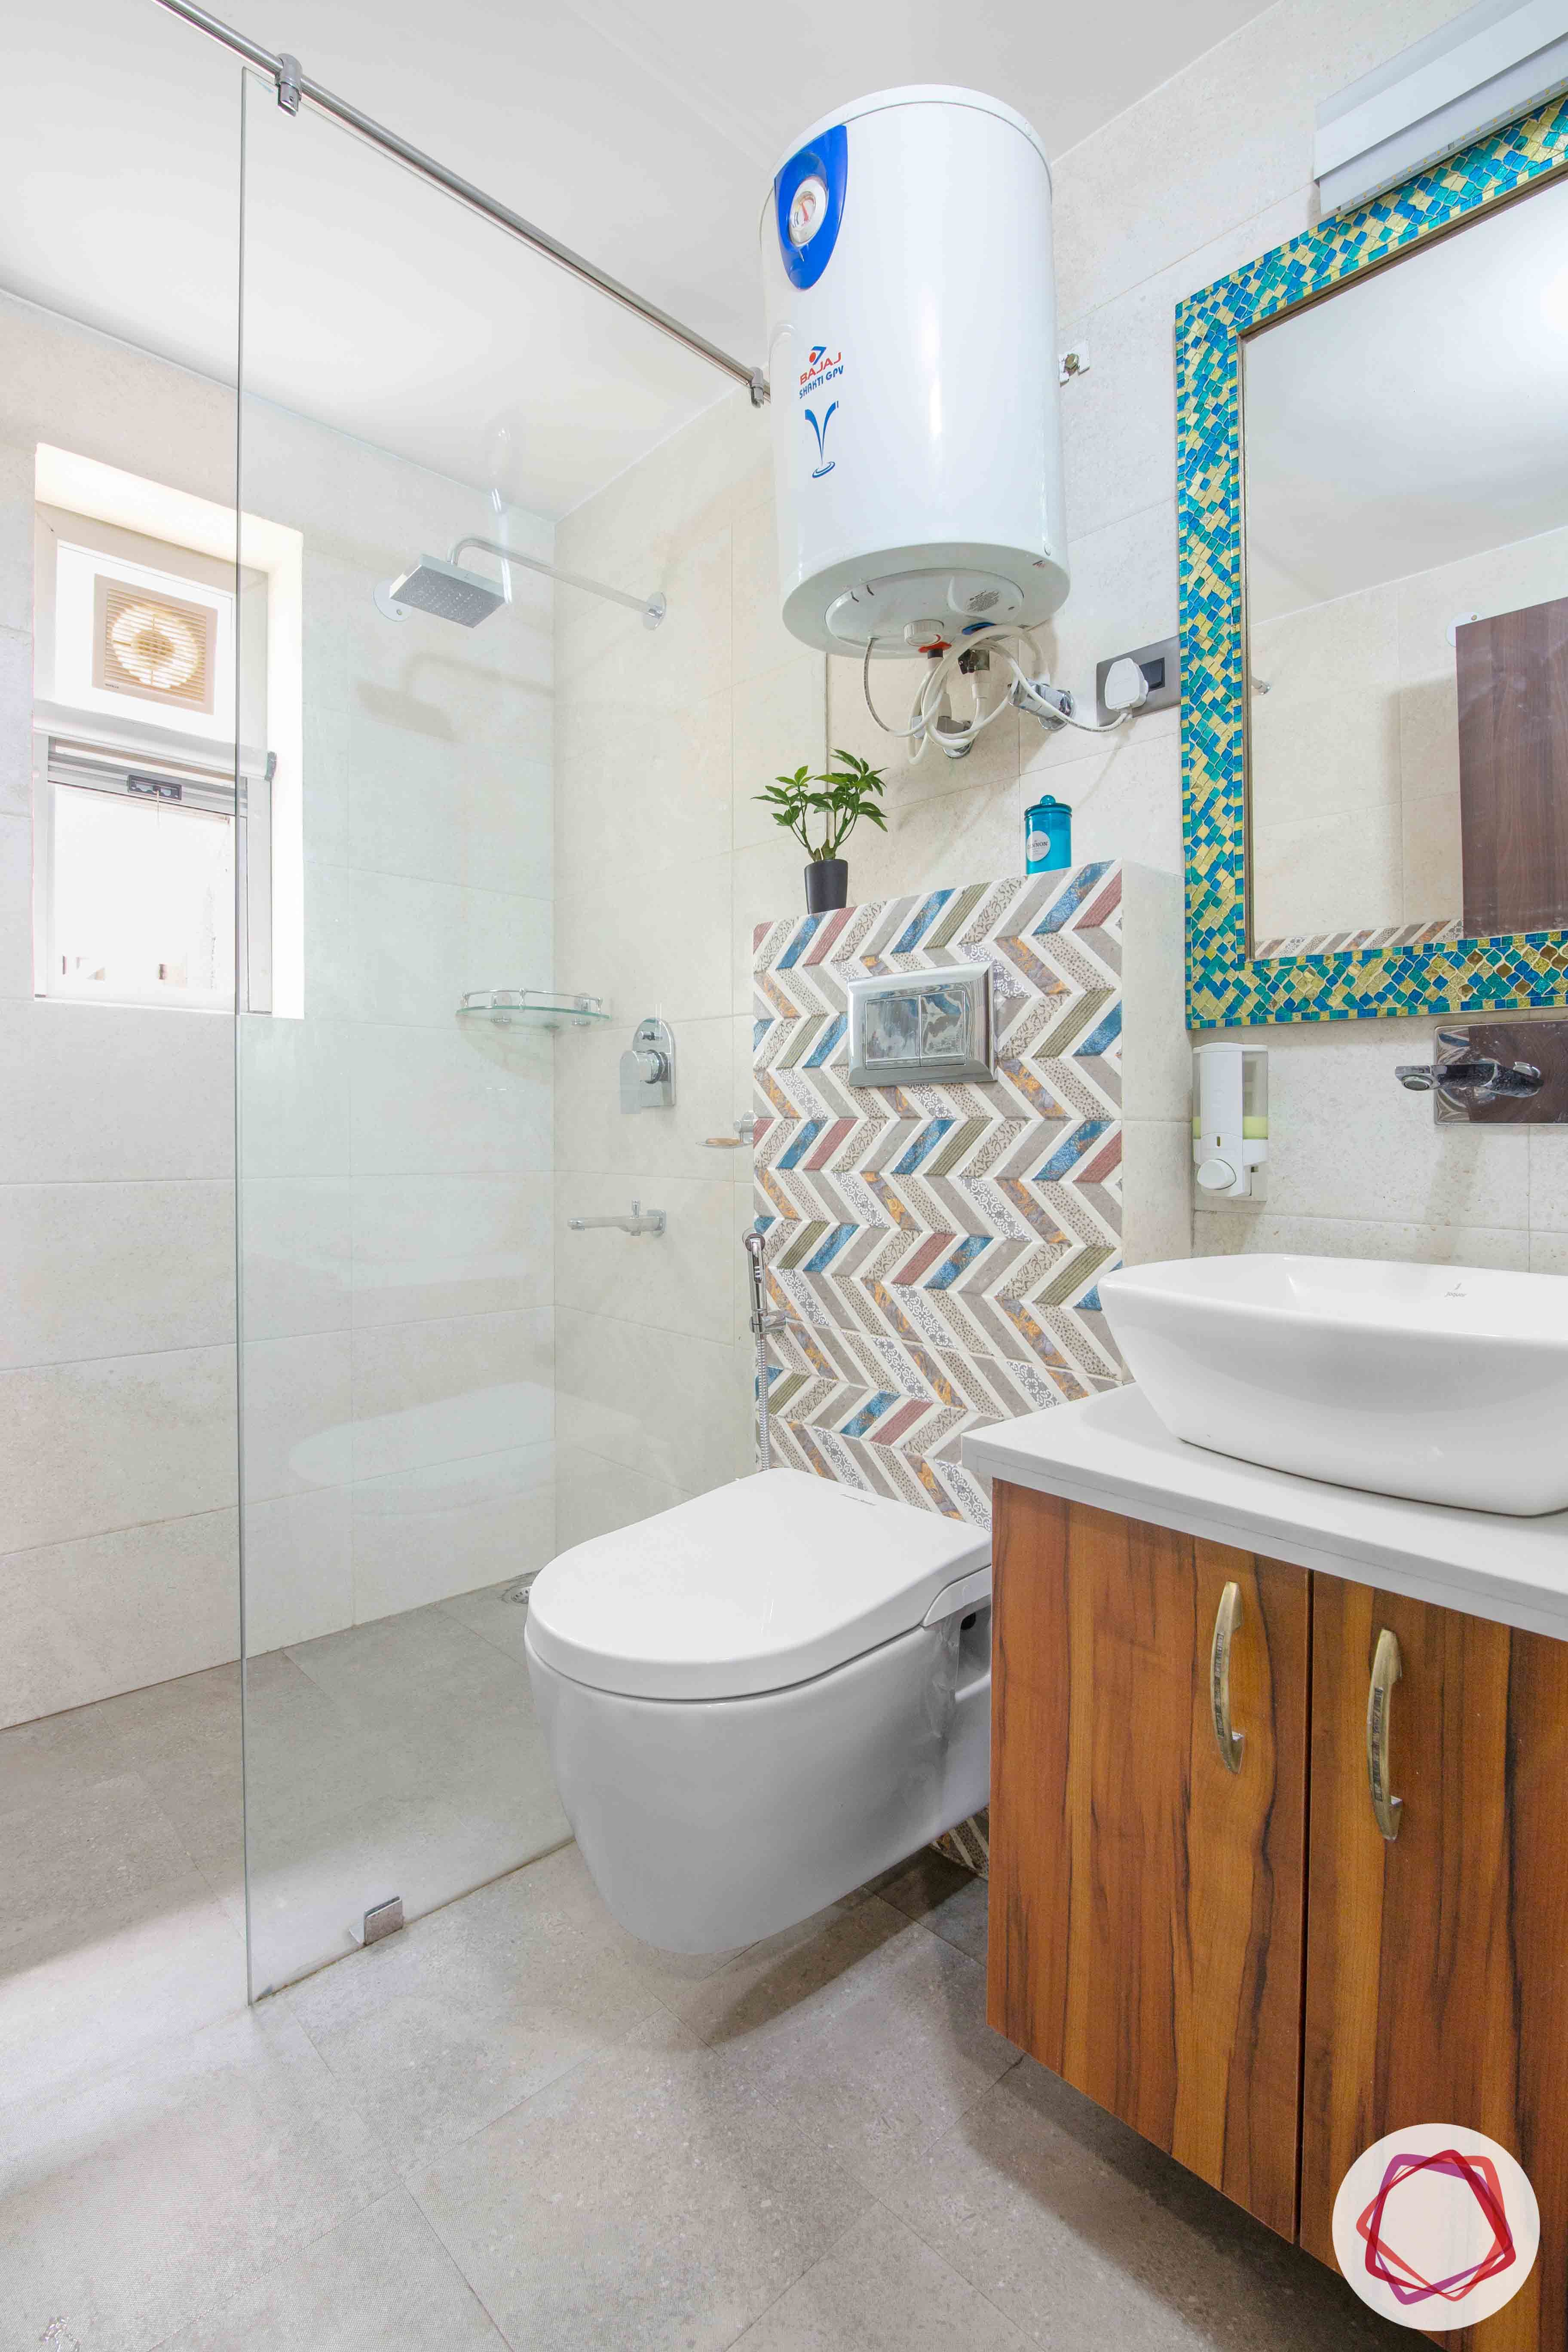 bathroom-mirror-glass-sink-vanity-storage-decorative-tiles